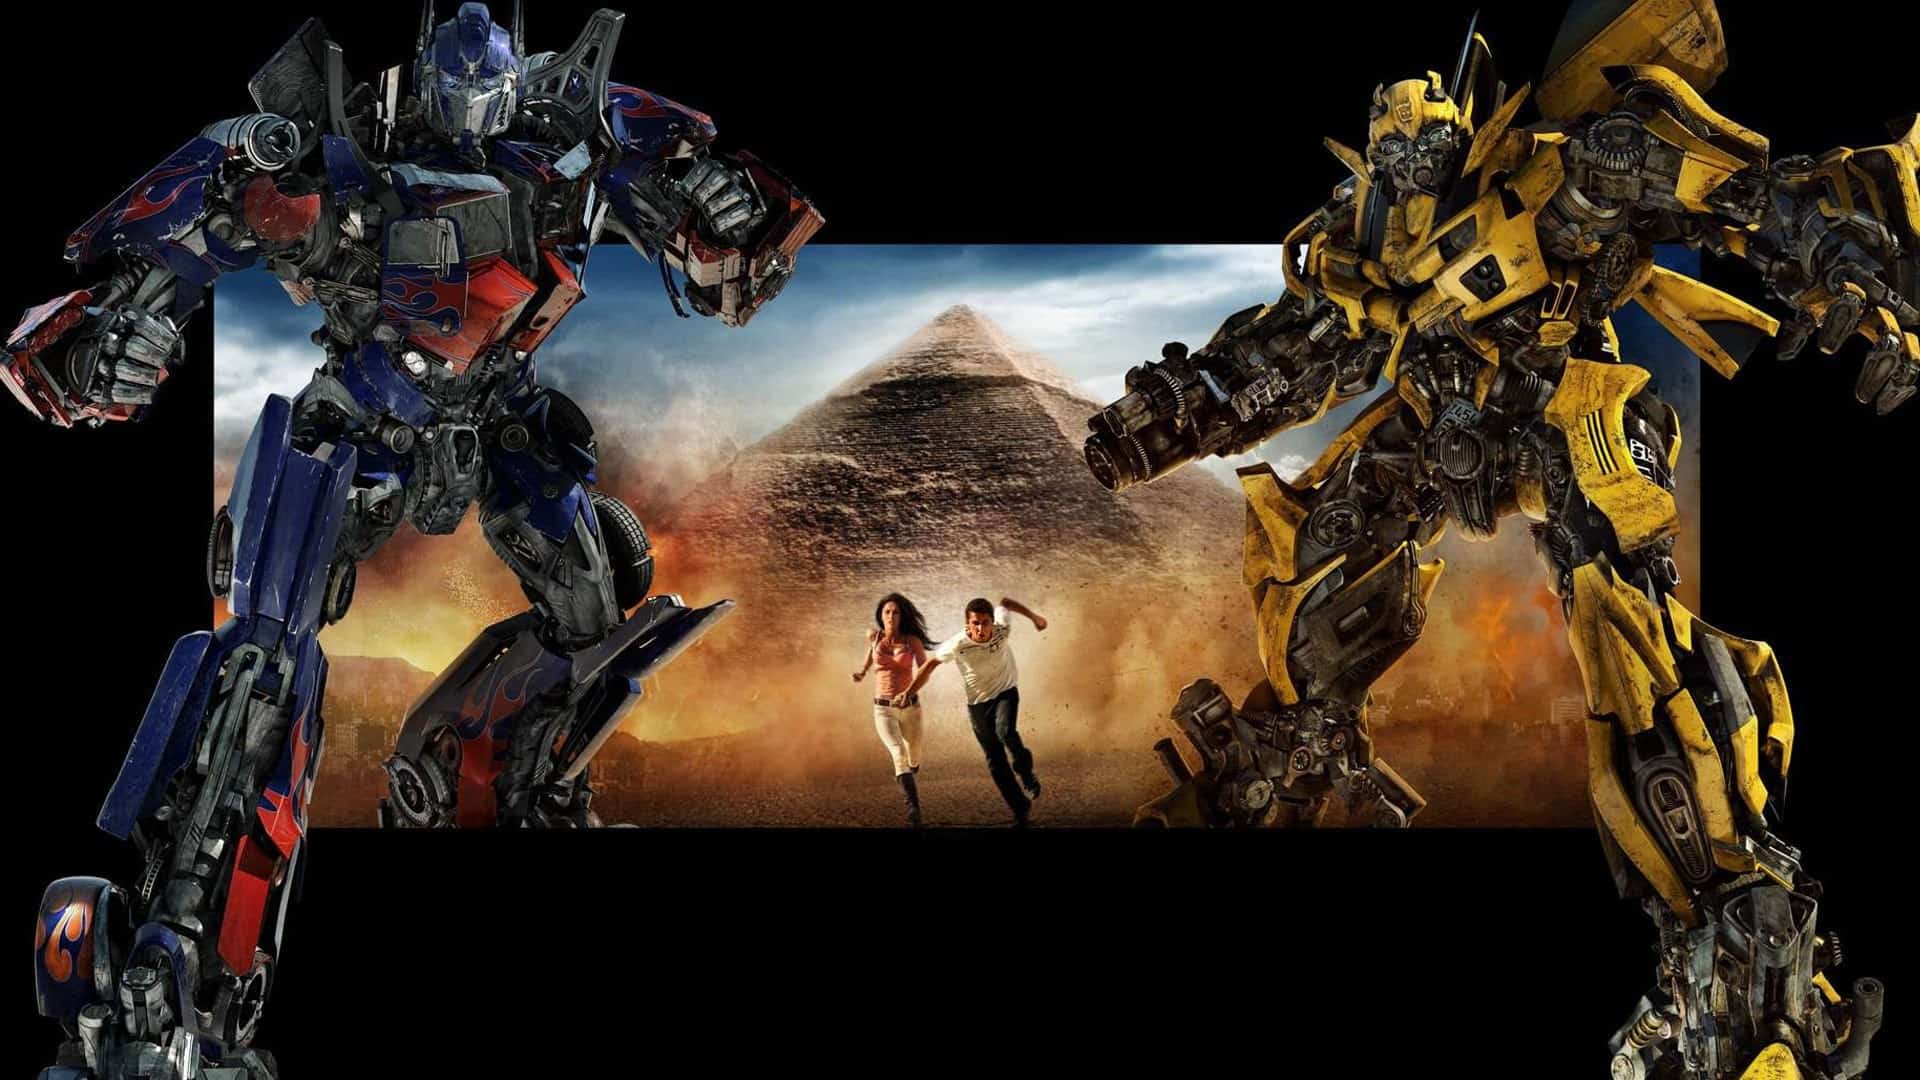 Transformers Revenge of the Fallen 4K 2009 big poster